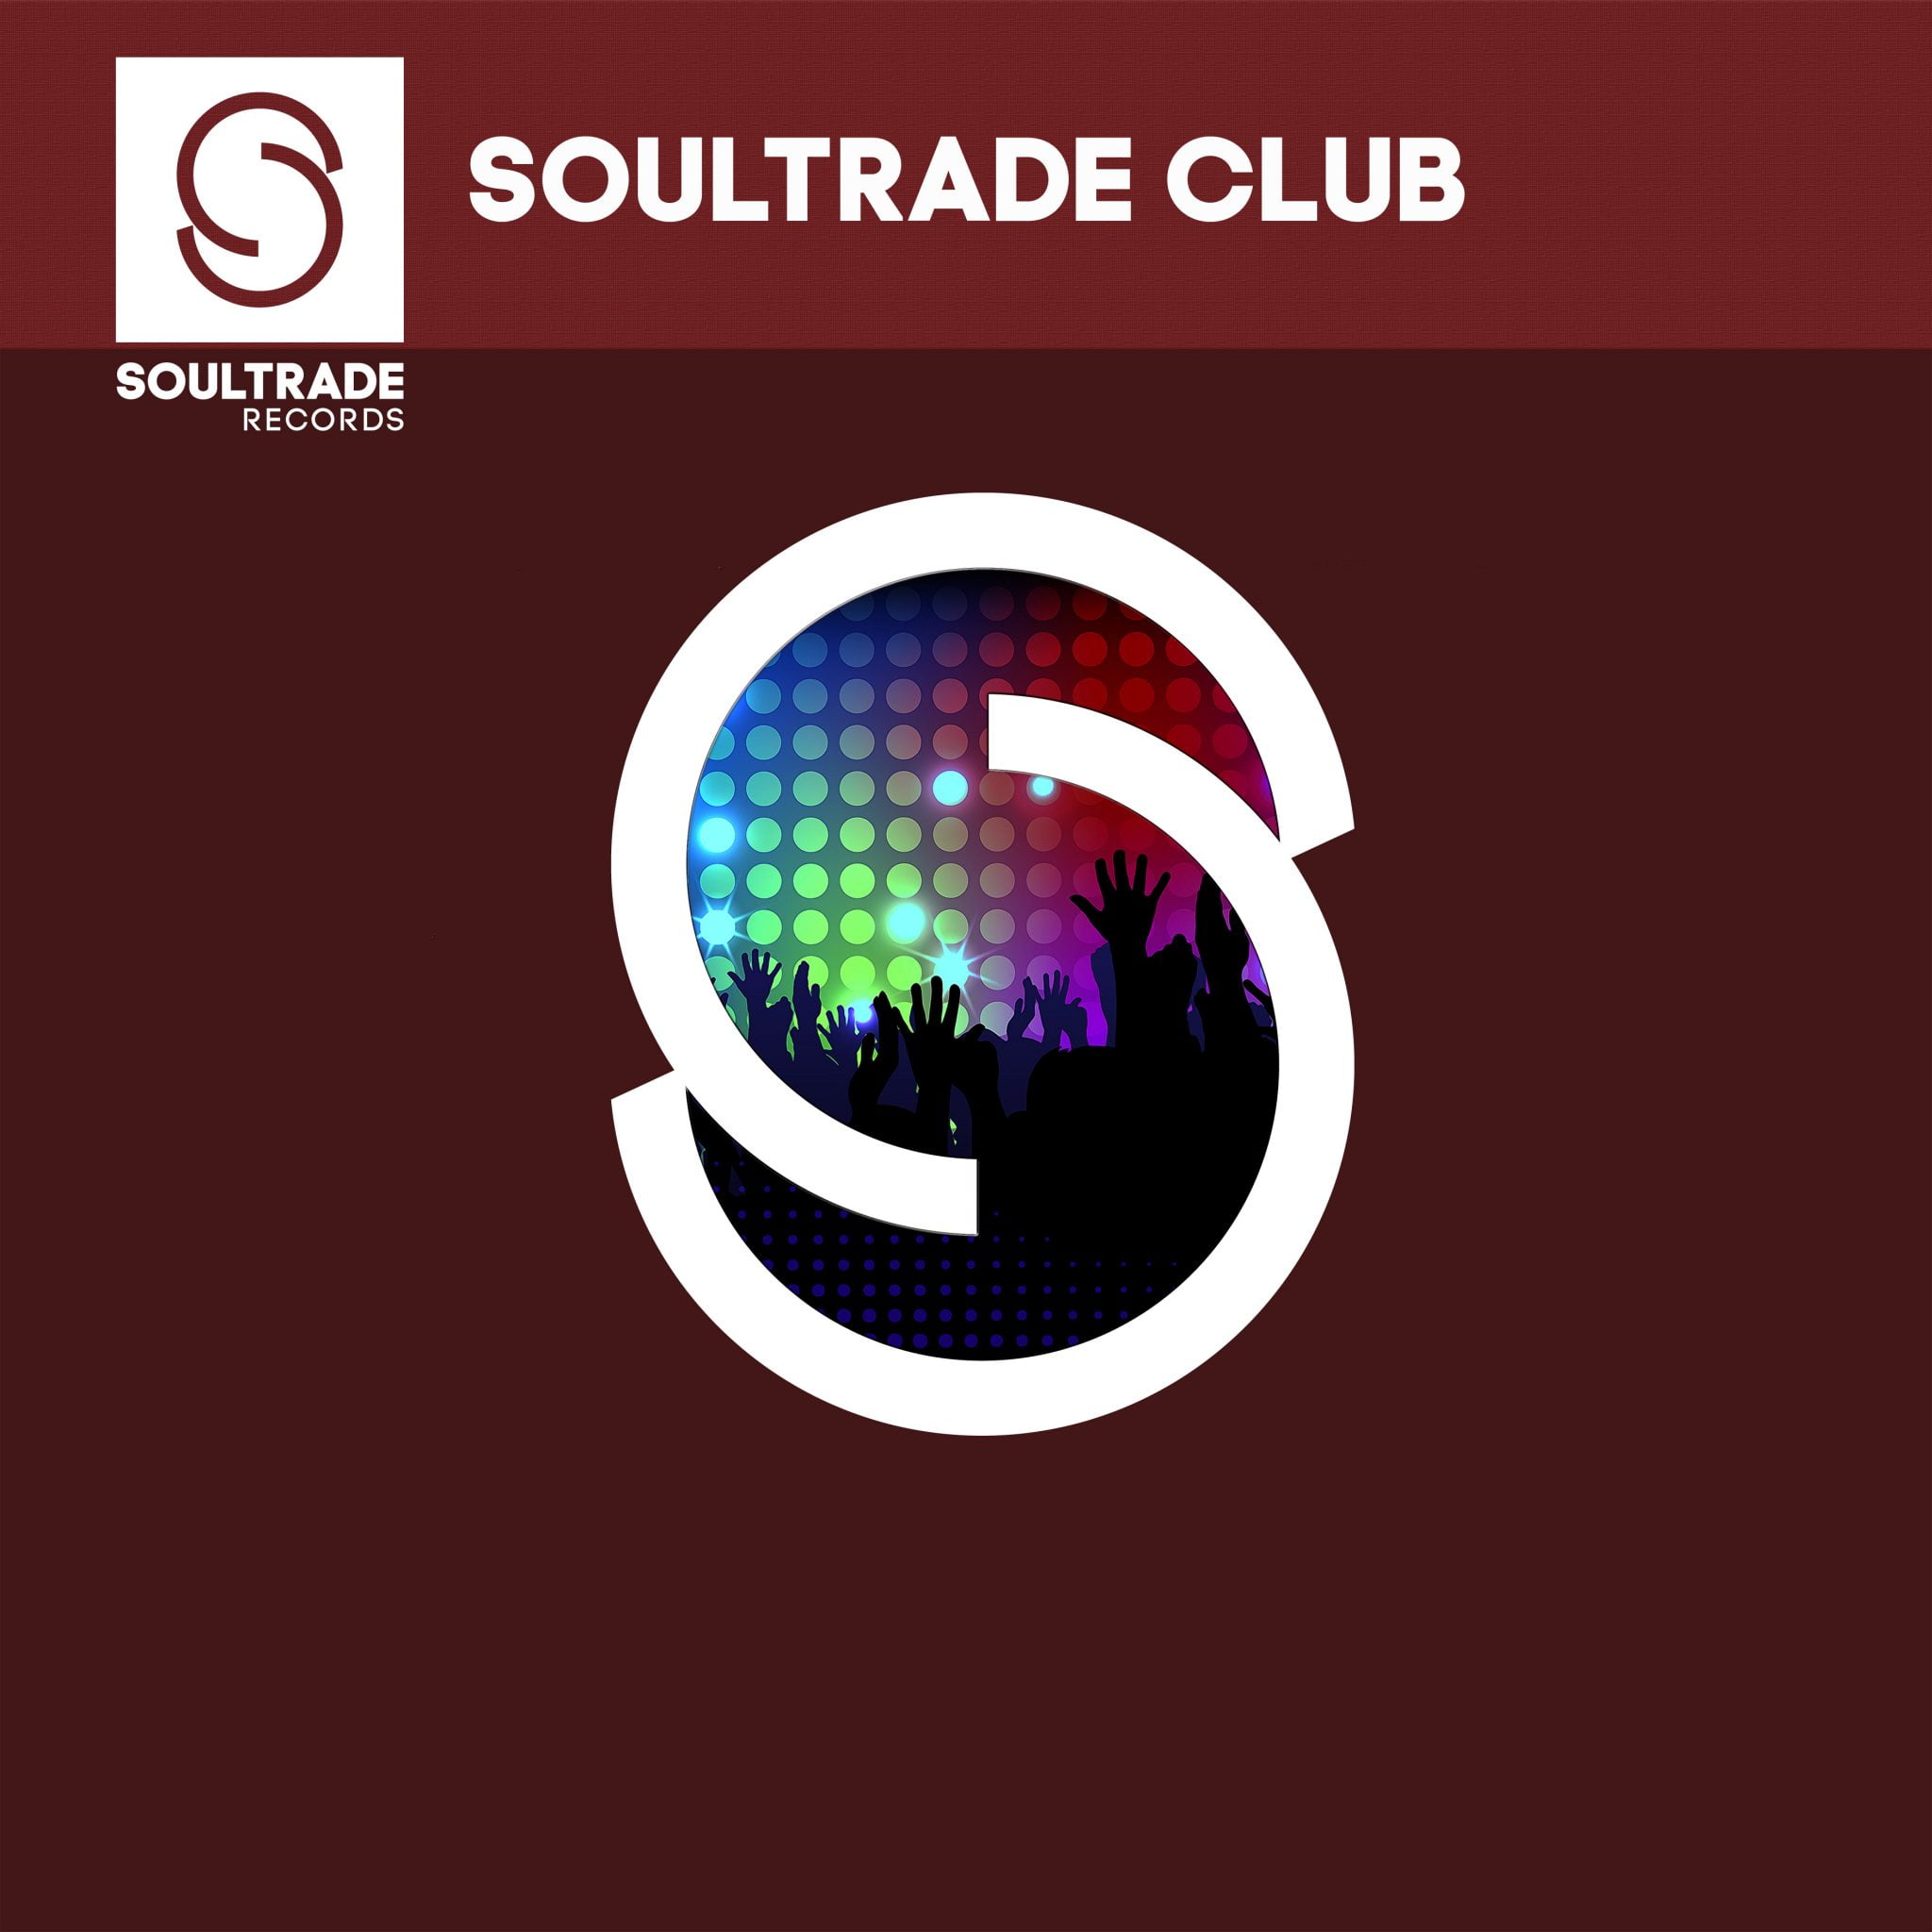 Soultrade Club